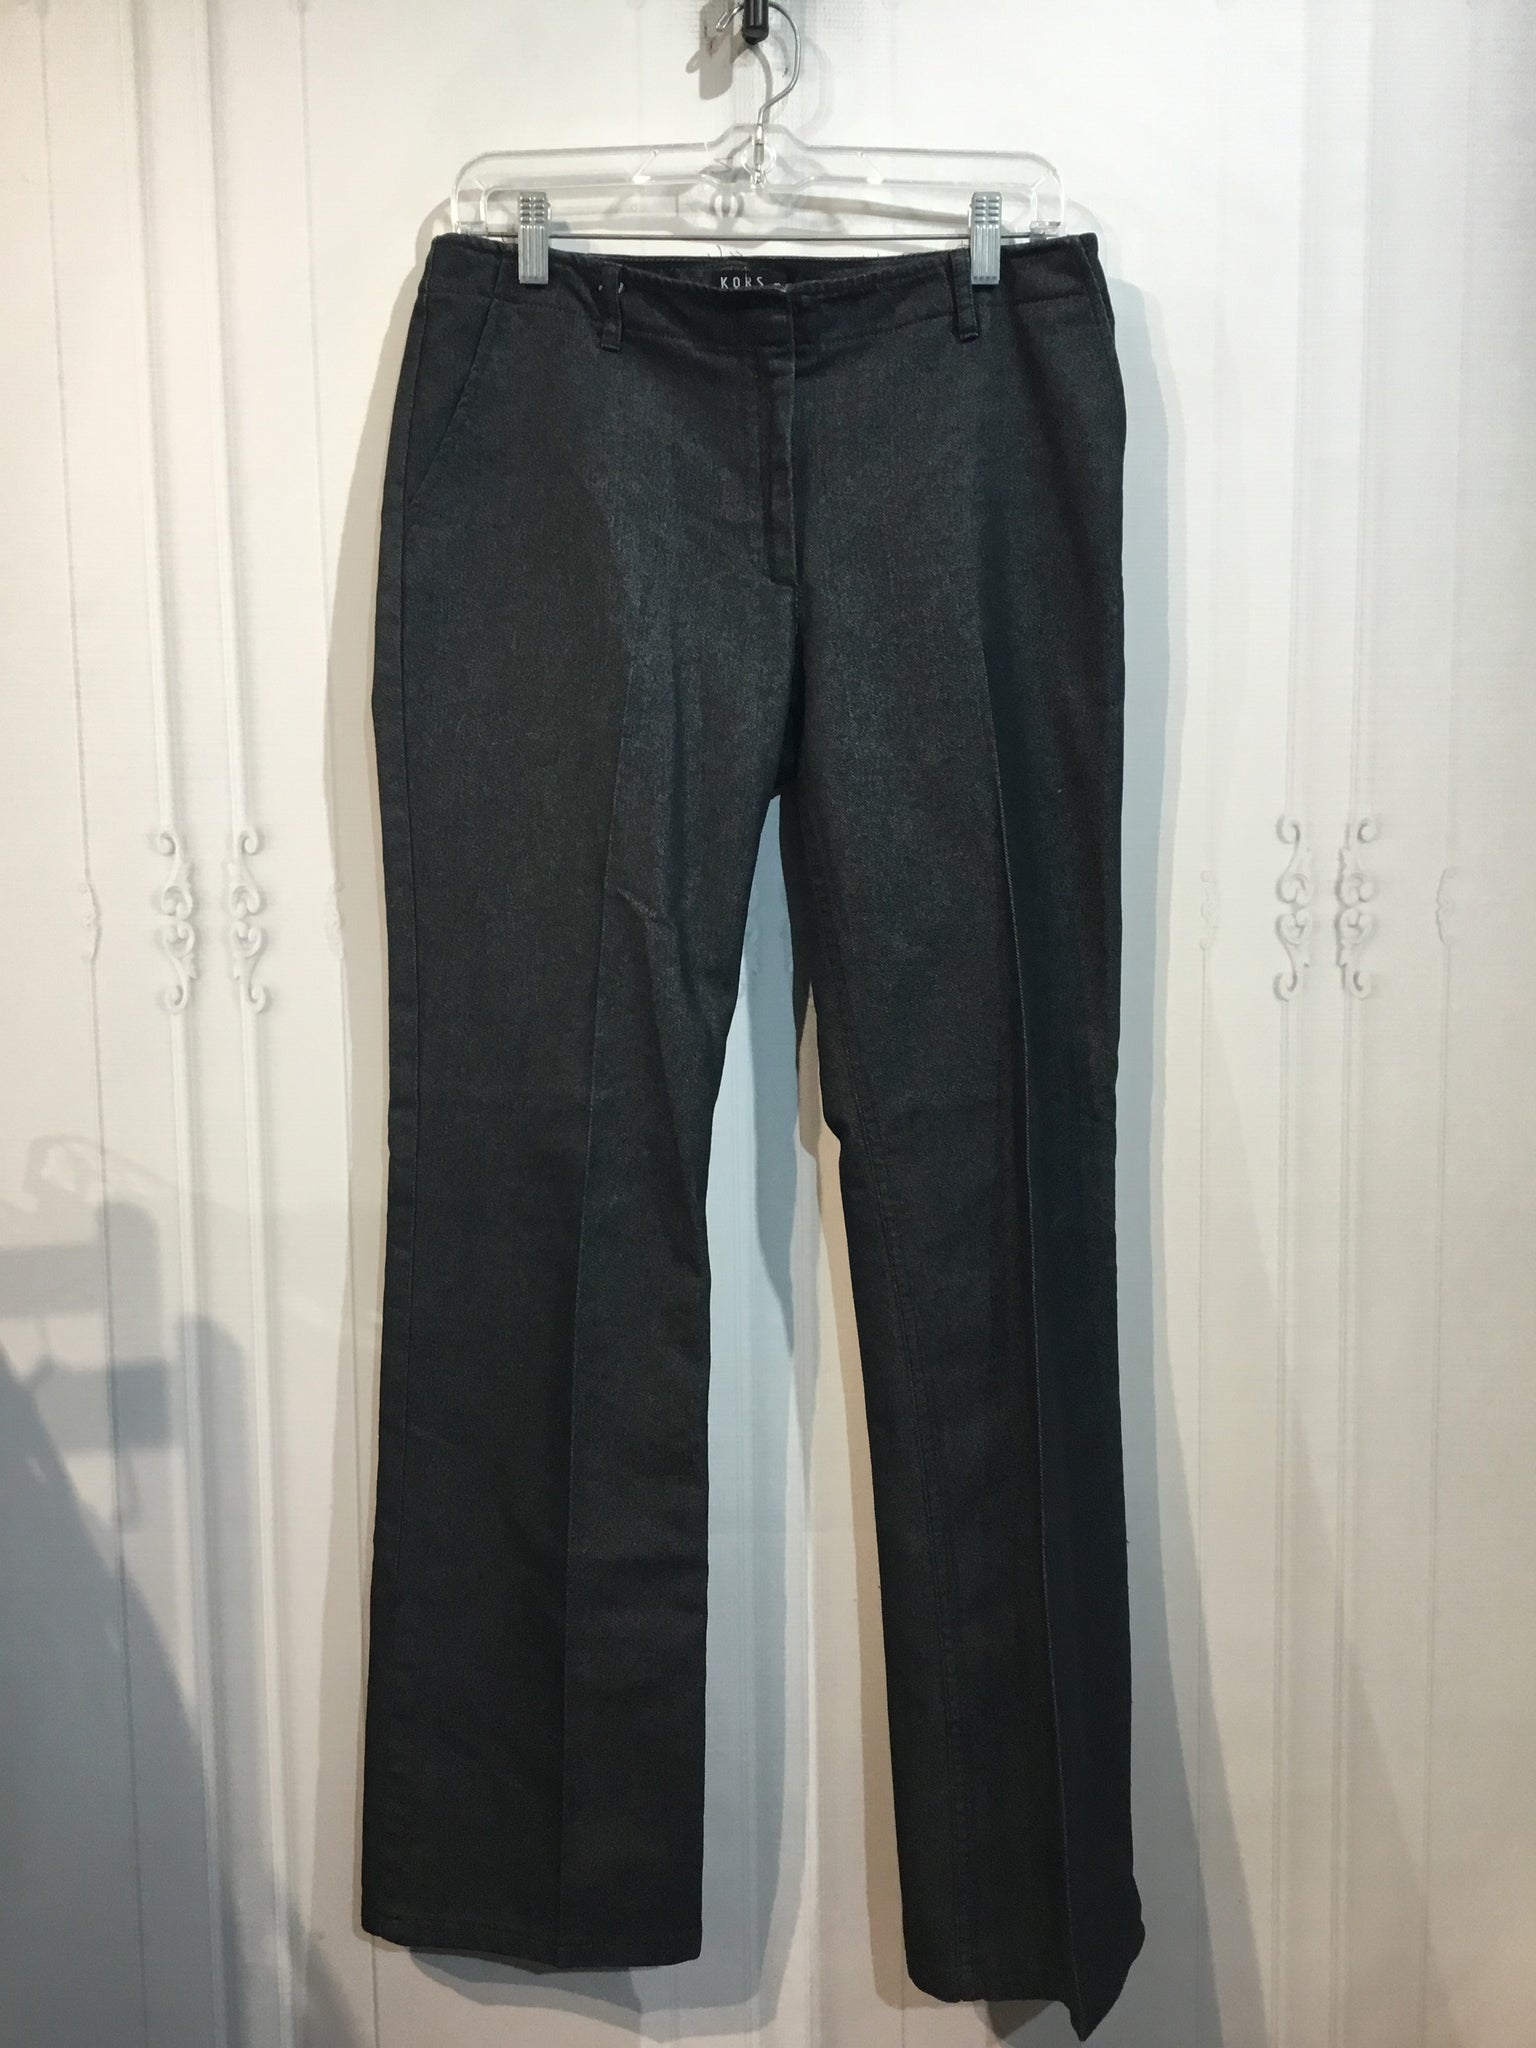 Kors Michael Kors Size M/8-10 Denim Jeans